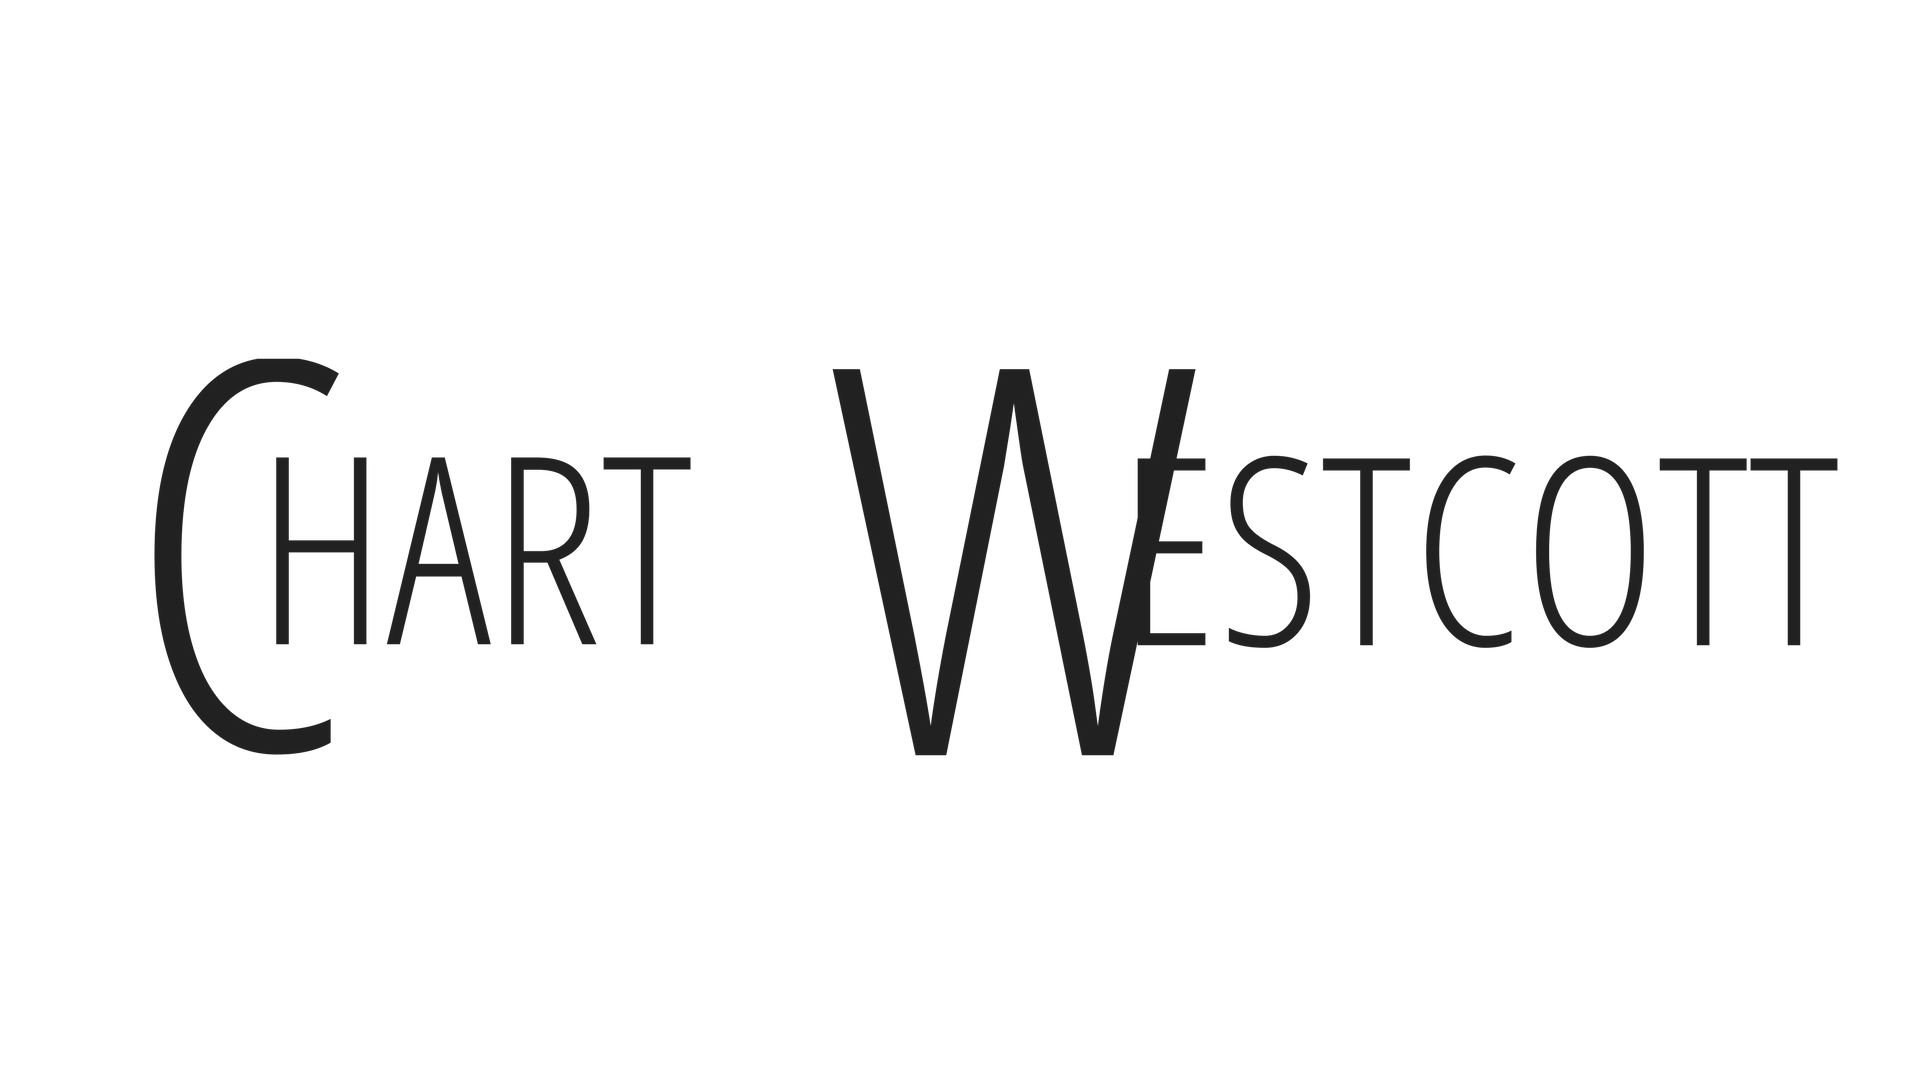 Chart Westcott